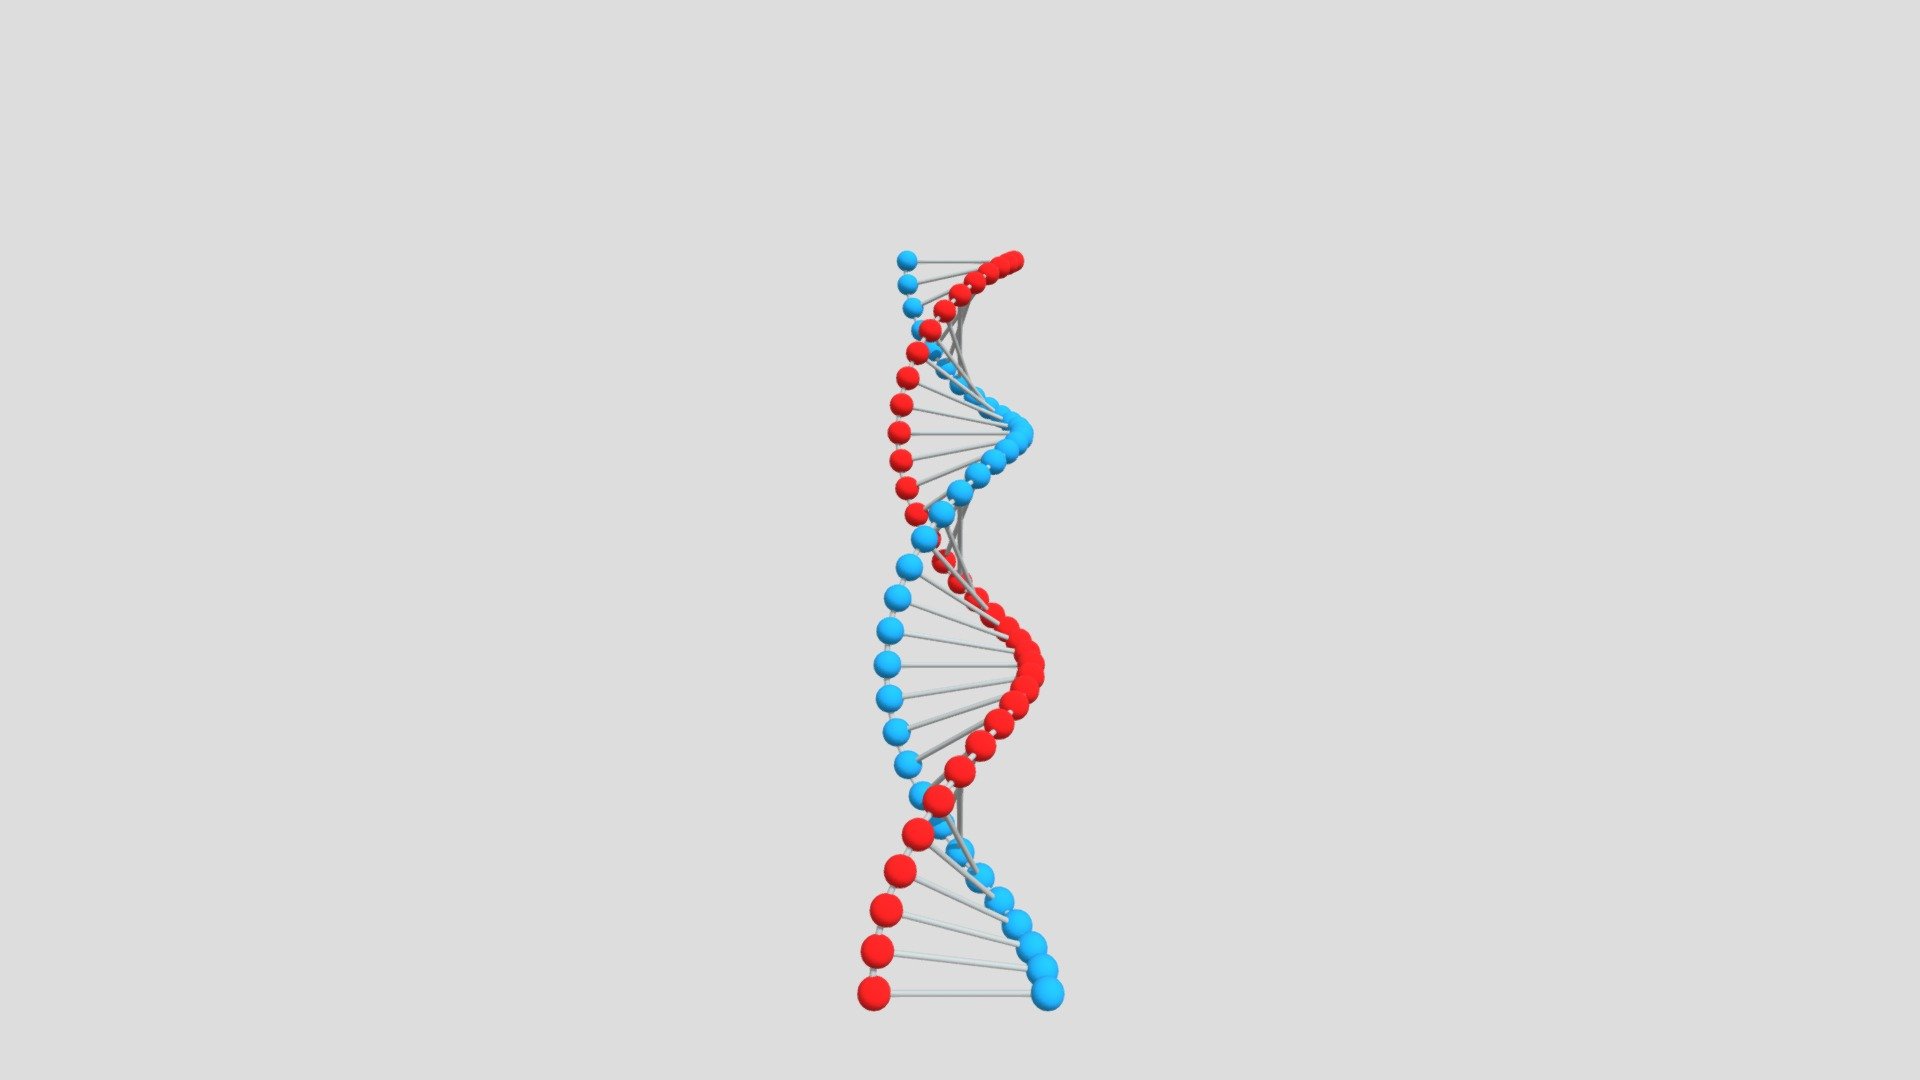 credit to @kraydan - DNA - 3D model by anatomiya.uz 3d model